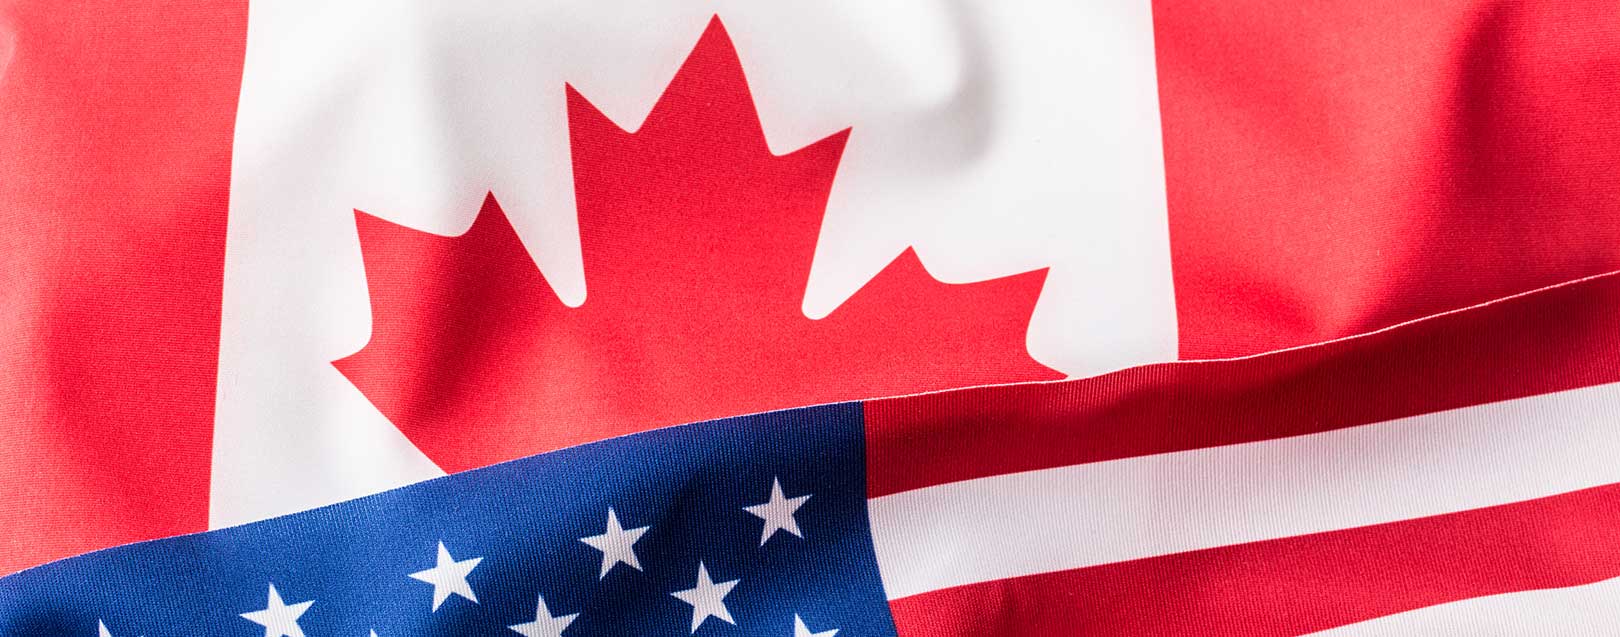 Post Trudeau's visit, Trump declares NAFTA will only be tweaked